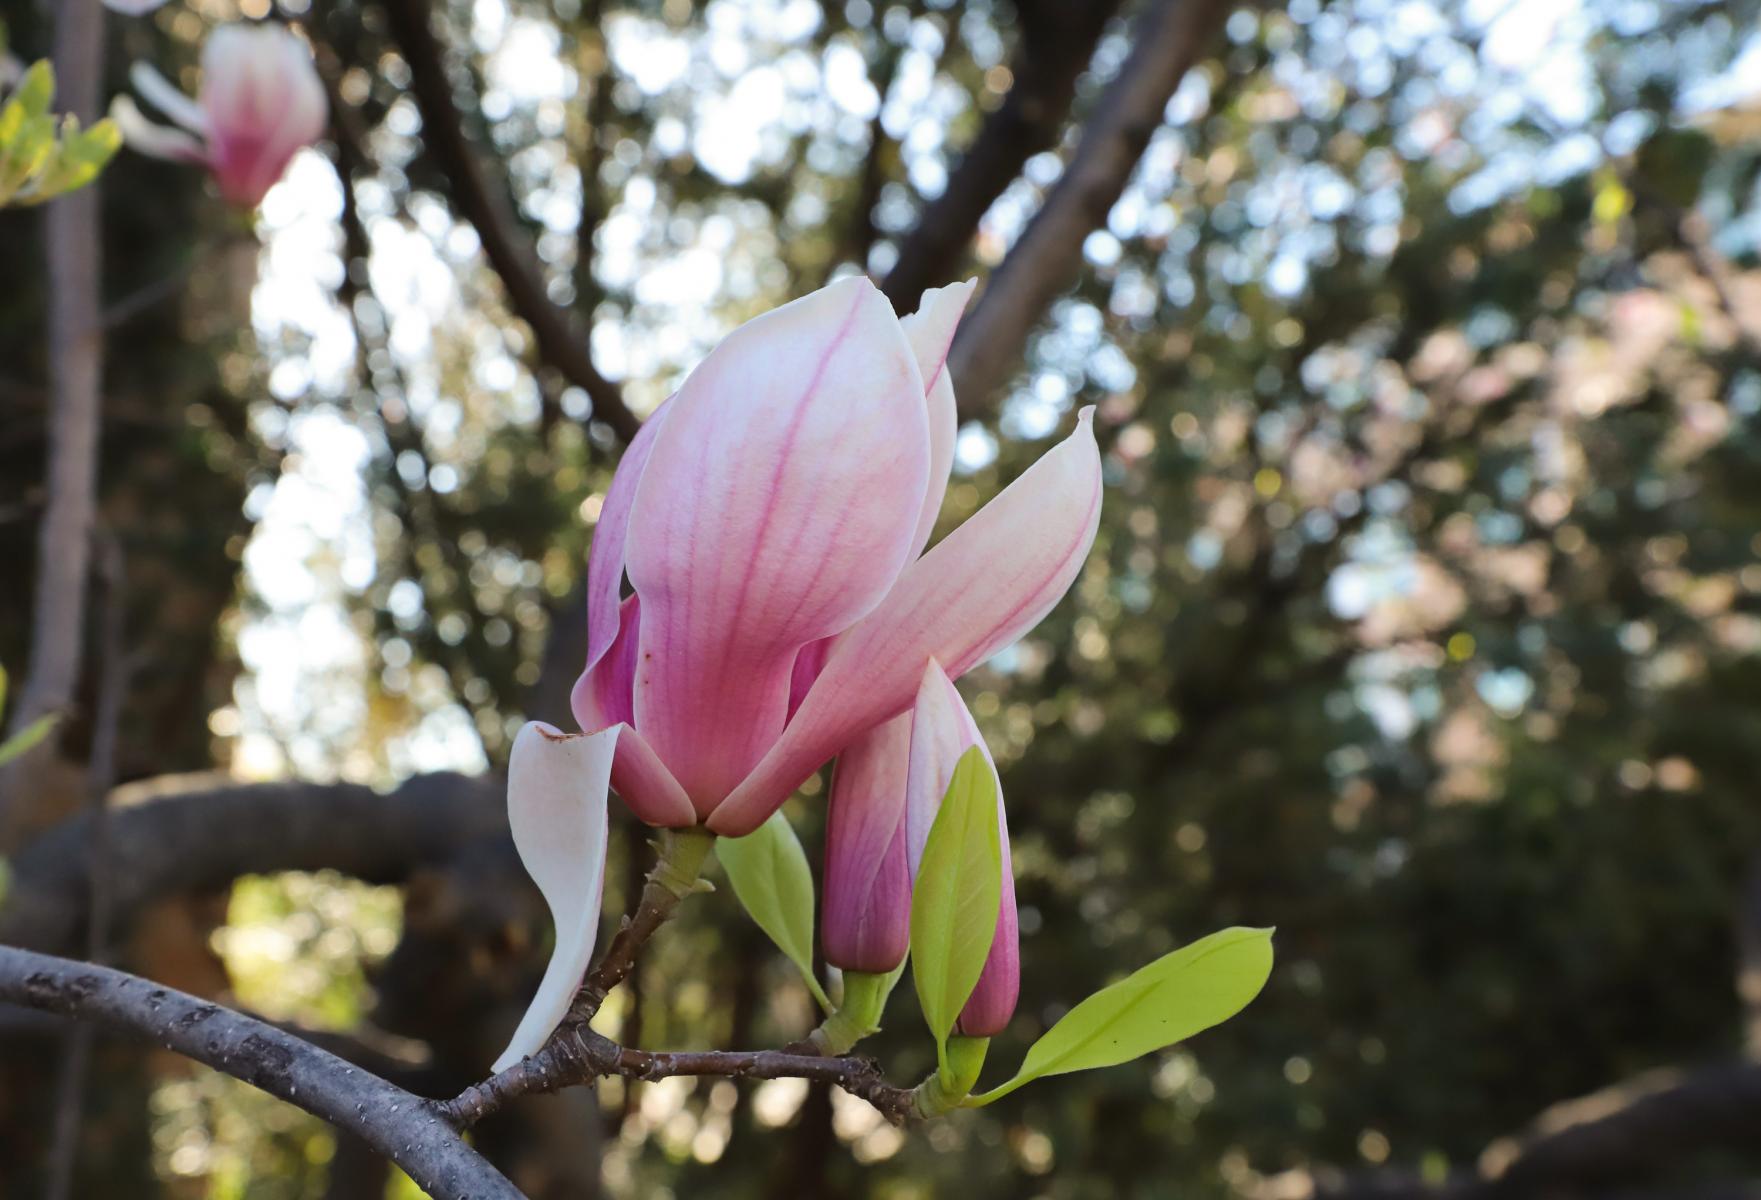 Saucer magnolia, Magnolia × soulangeana